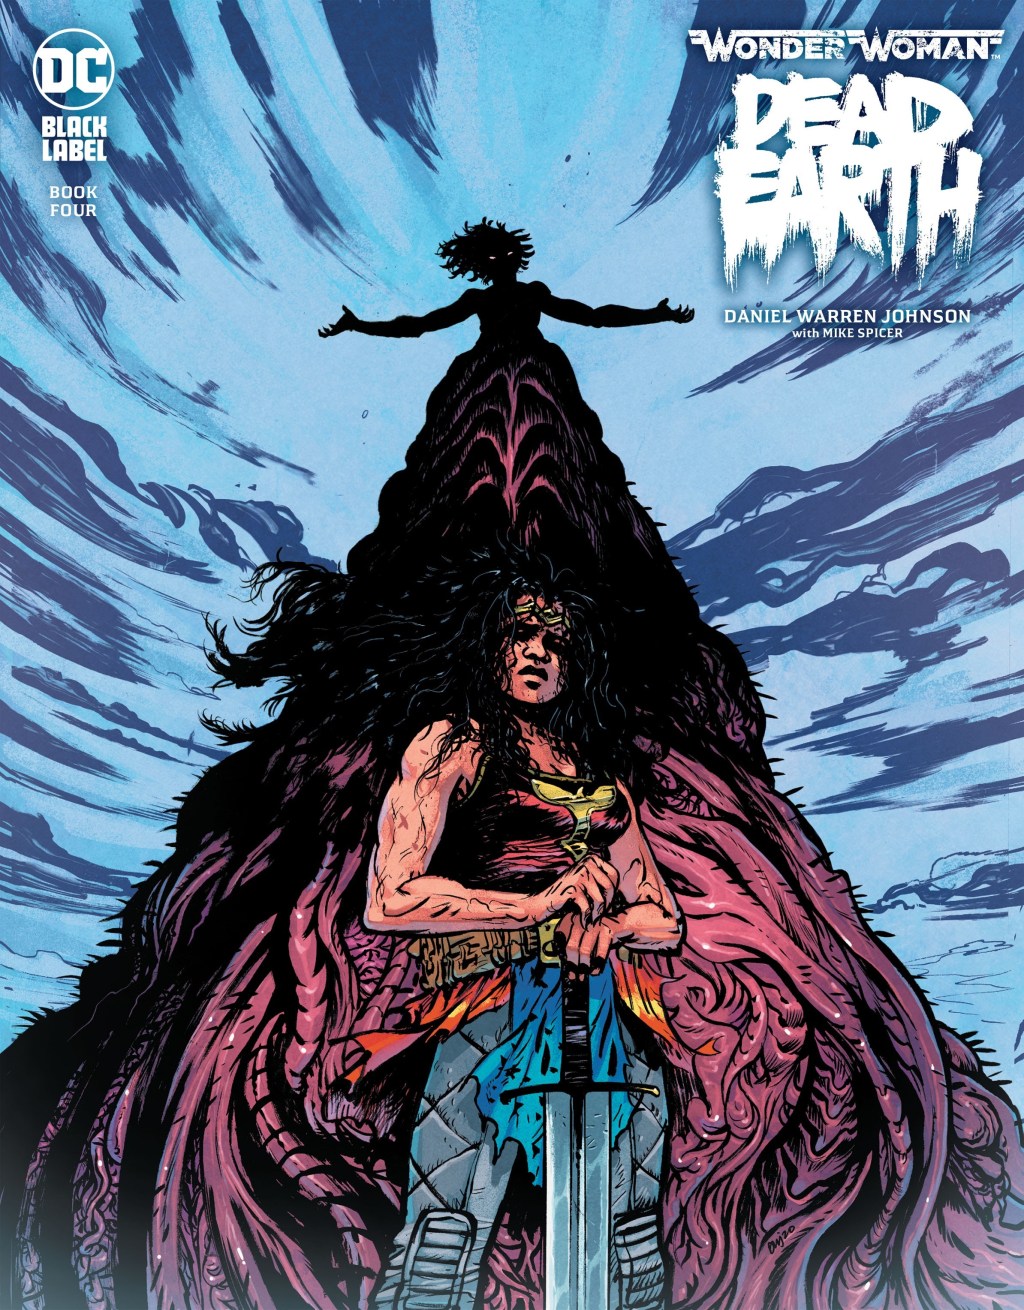 Wonder Woman: Dead Earth Vol. 1 Issue #4 "Book Four" (2020), DC Comics. Words by Daniel Warren Johnson. Art by Daniel Warren Johnson and Michael Spicer